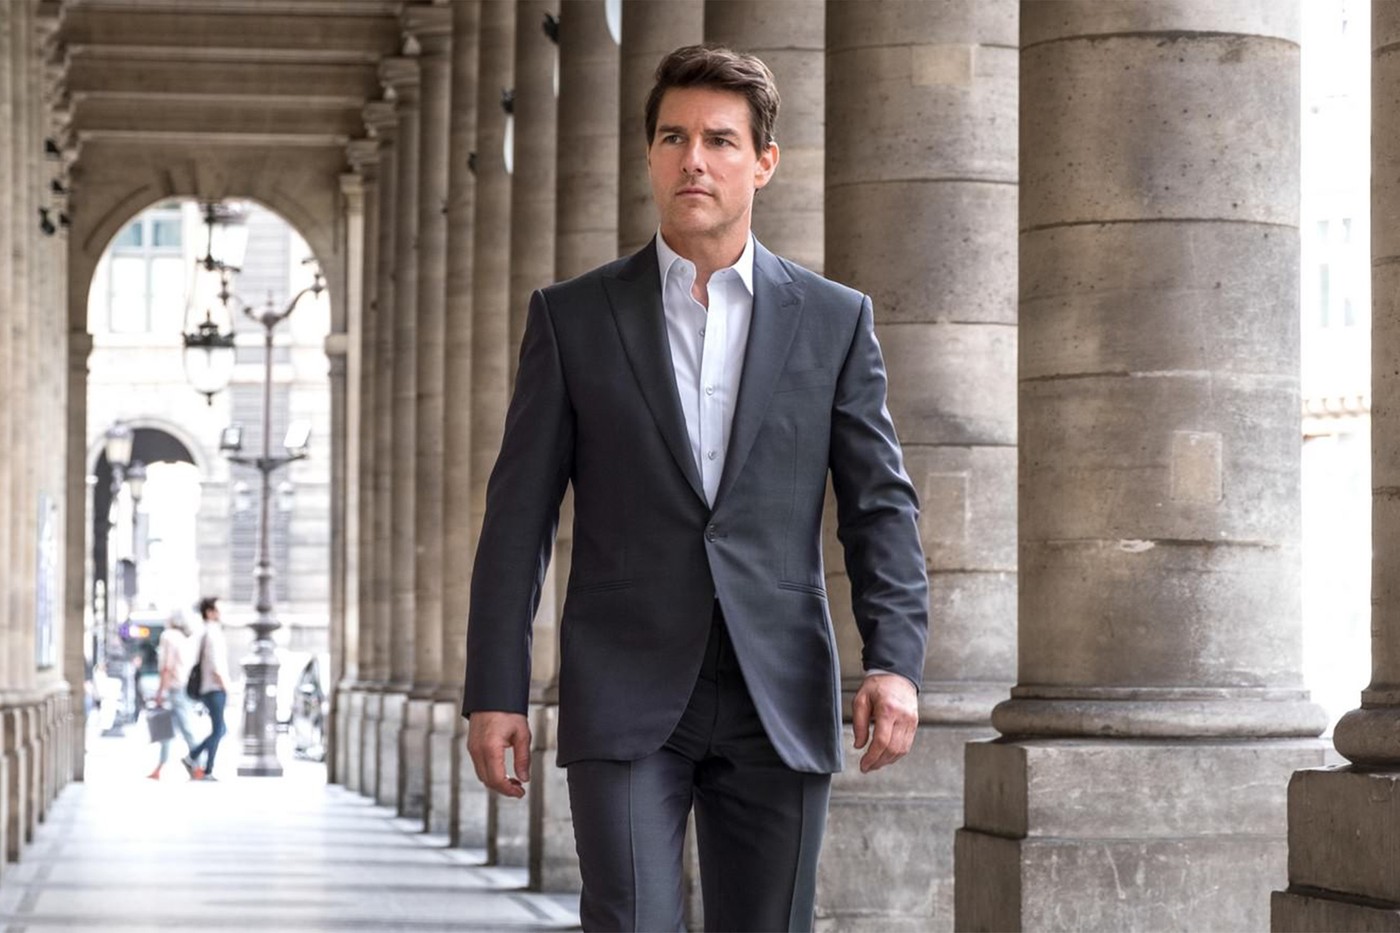 汤姆克·鲁斯 Tom Cruise 主演《碟中谍 / Mission: Impossible》第 7、8 续集将再次延期至 2023 年后